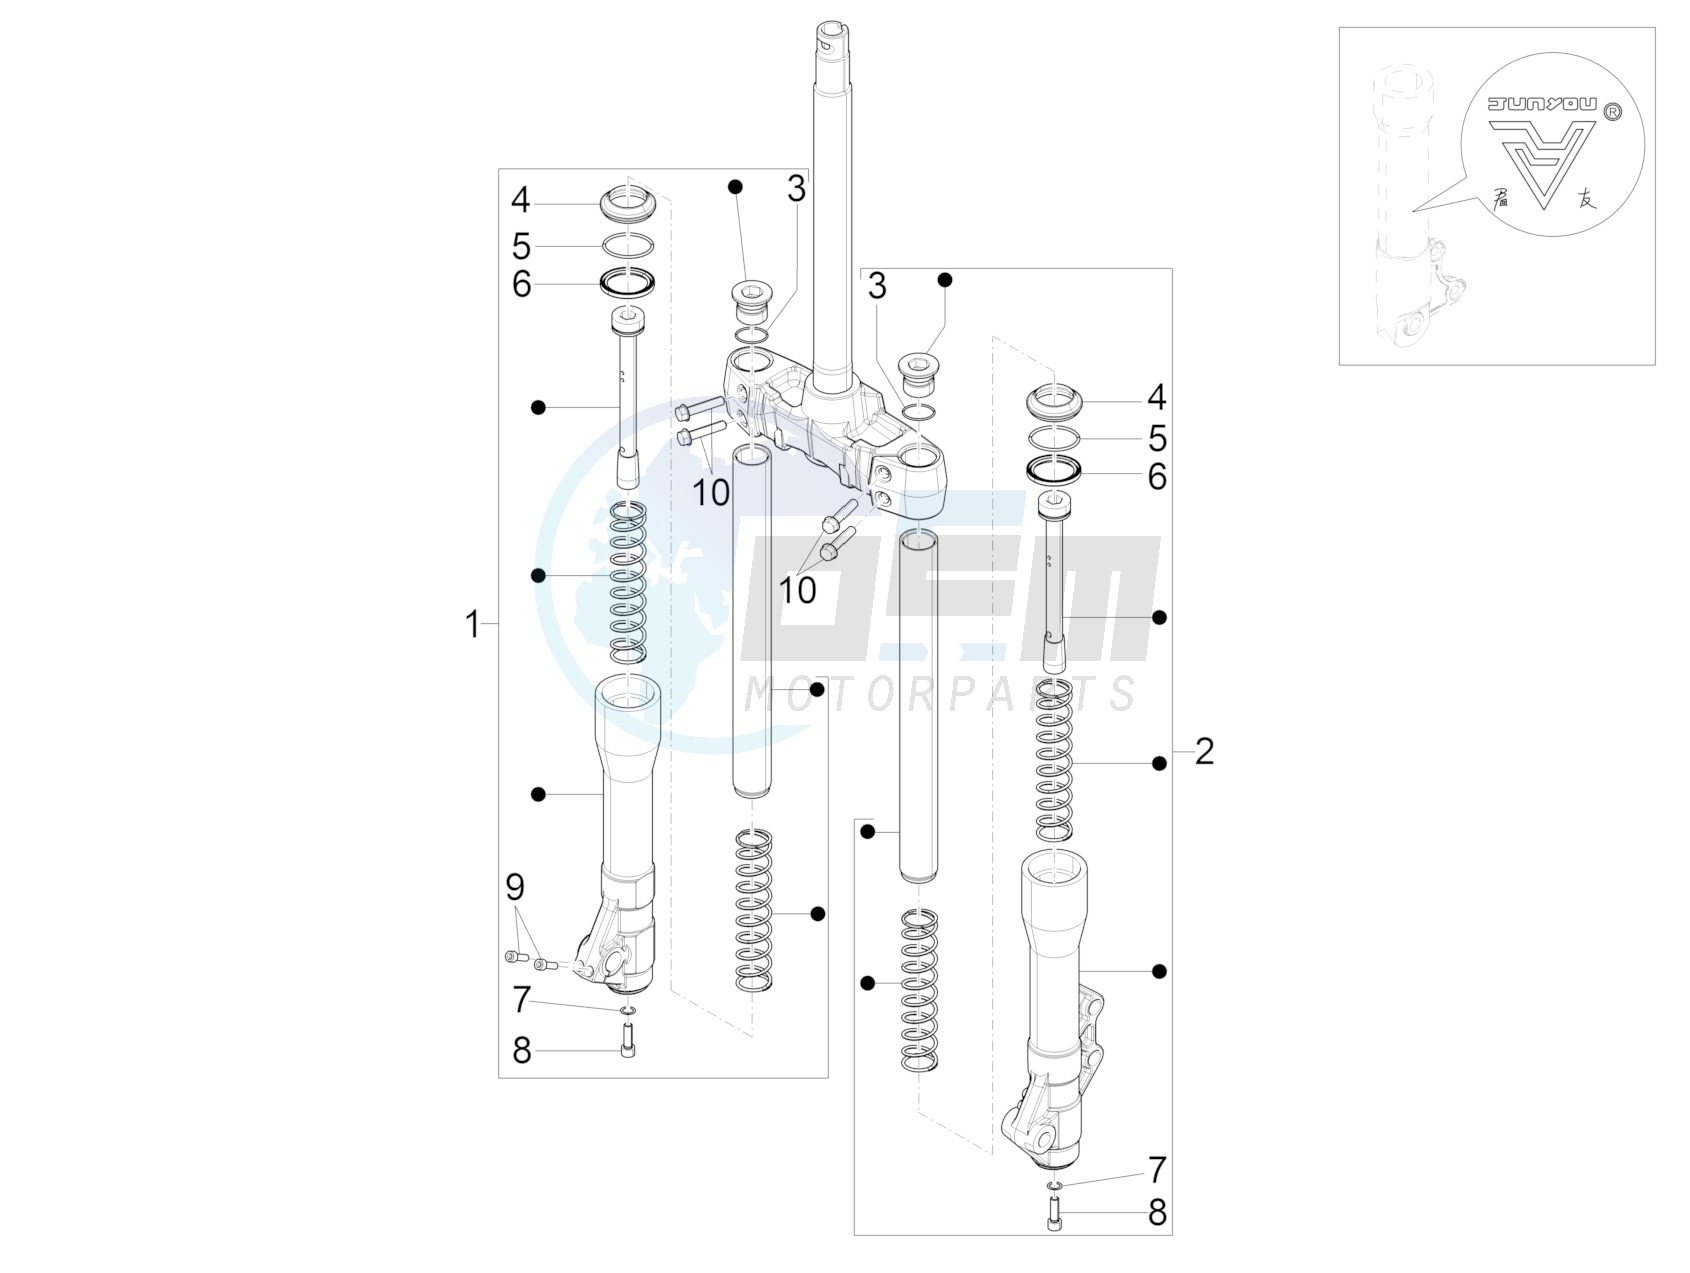 Fork's components (Mingxing) blueprint